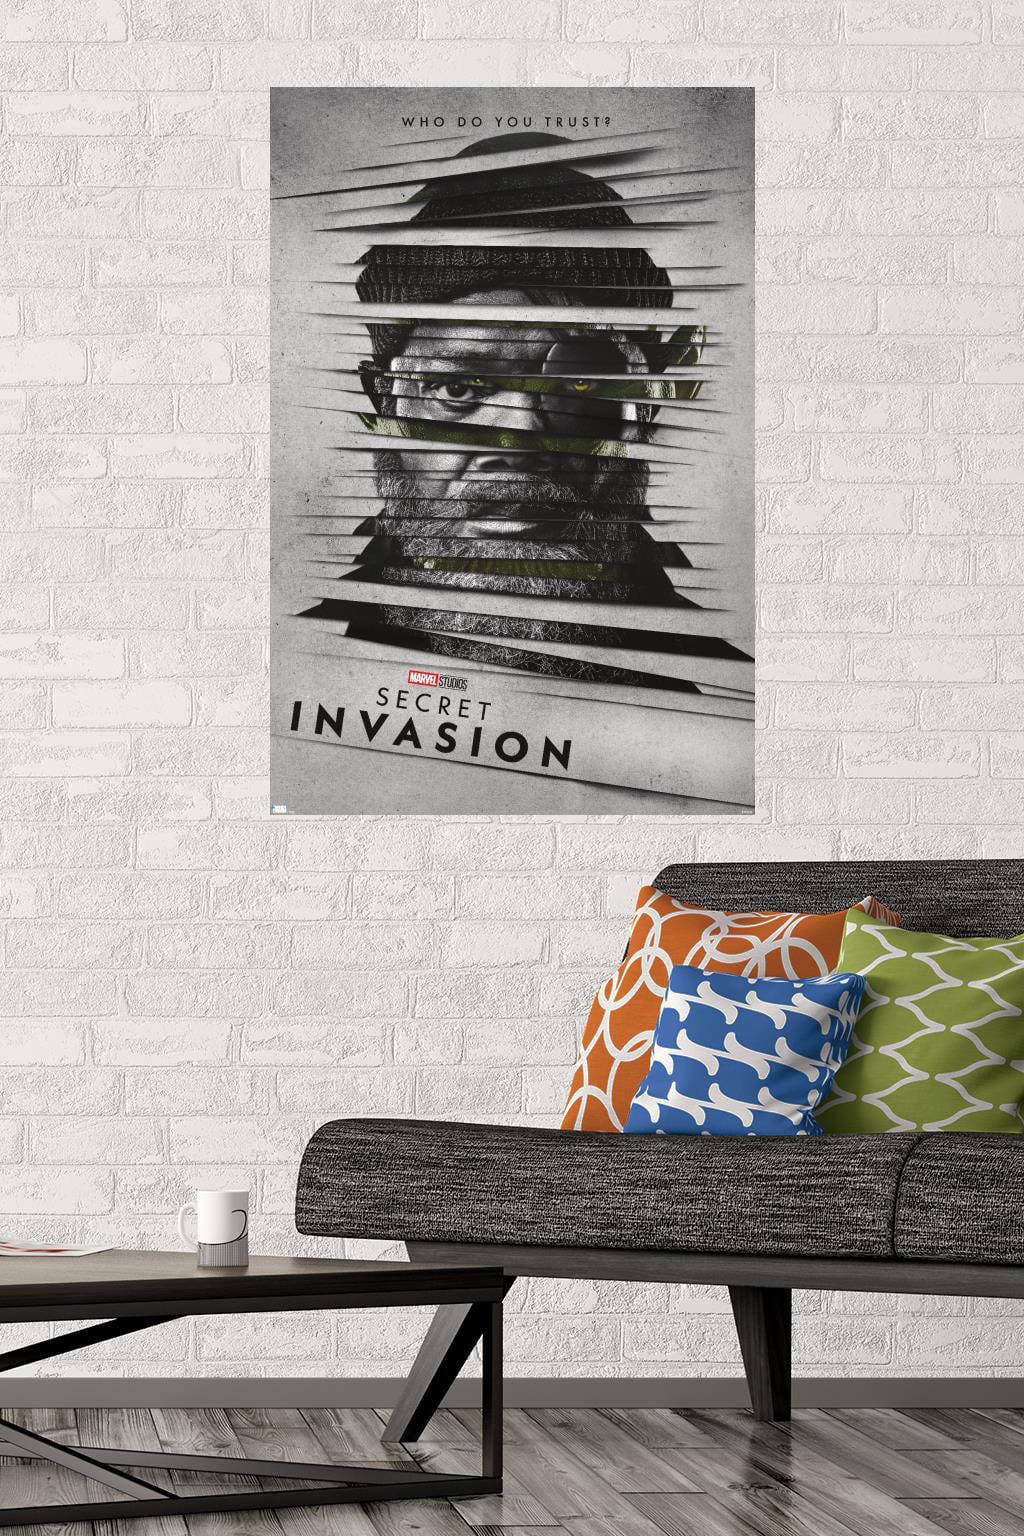 Marvel Studios Assembled The Making of Secret Invasion Poster